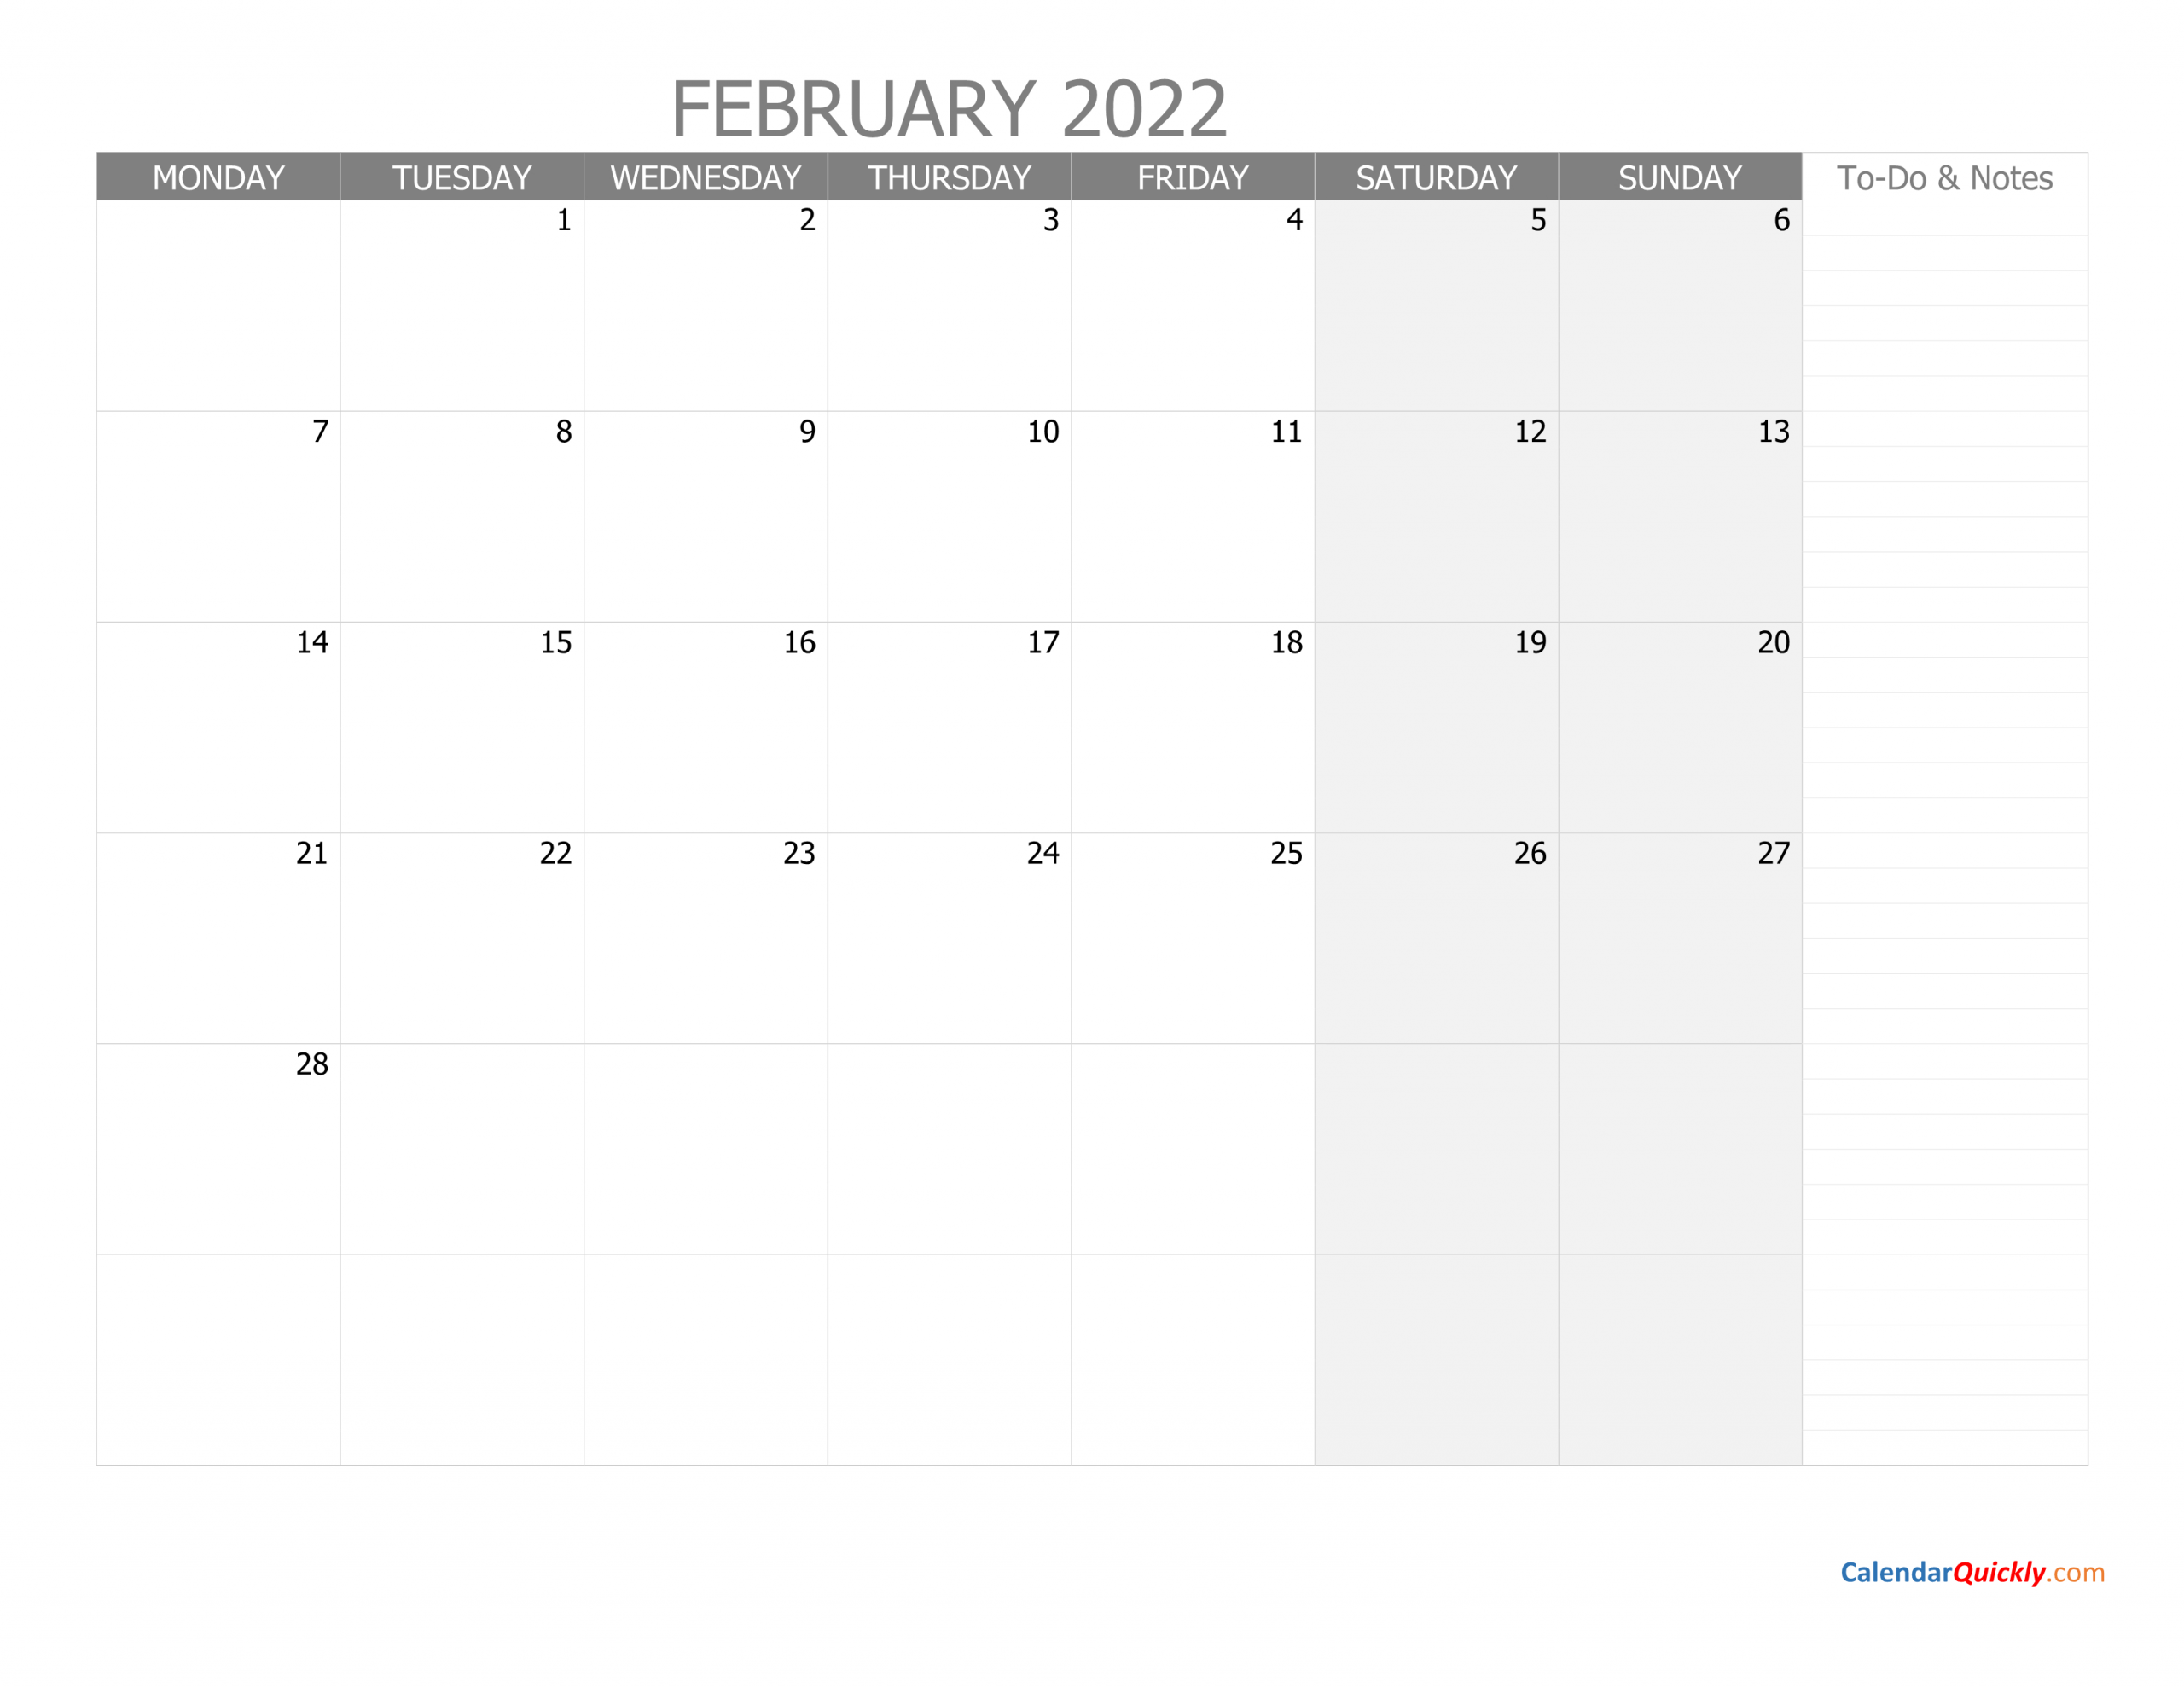 February Monday Calendar 2022 With Notes | Calendar Quickly